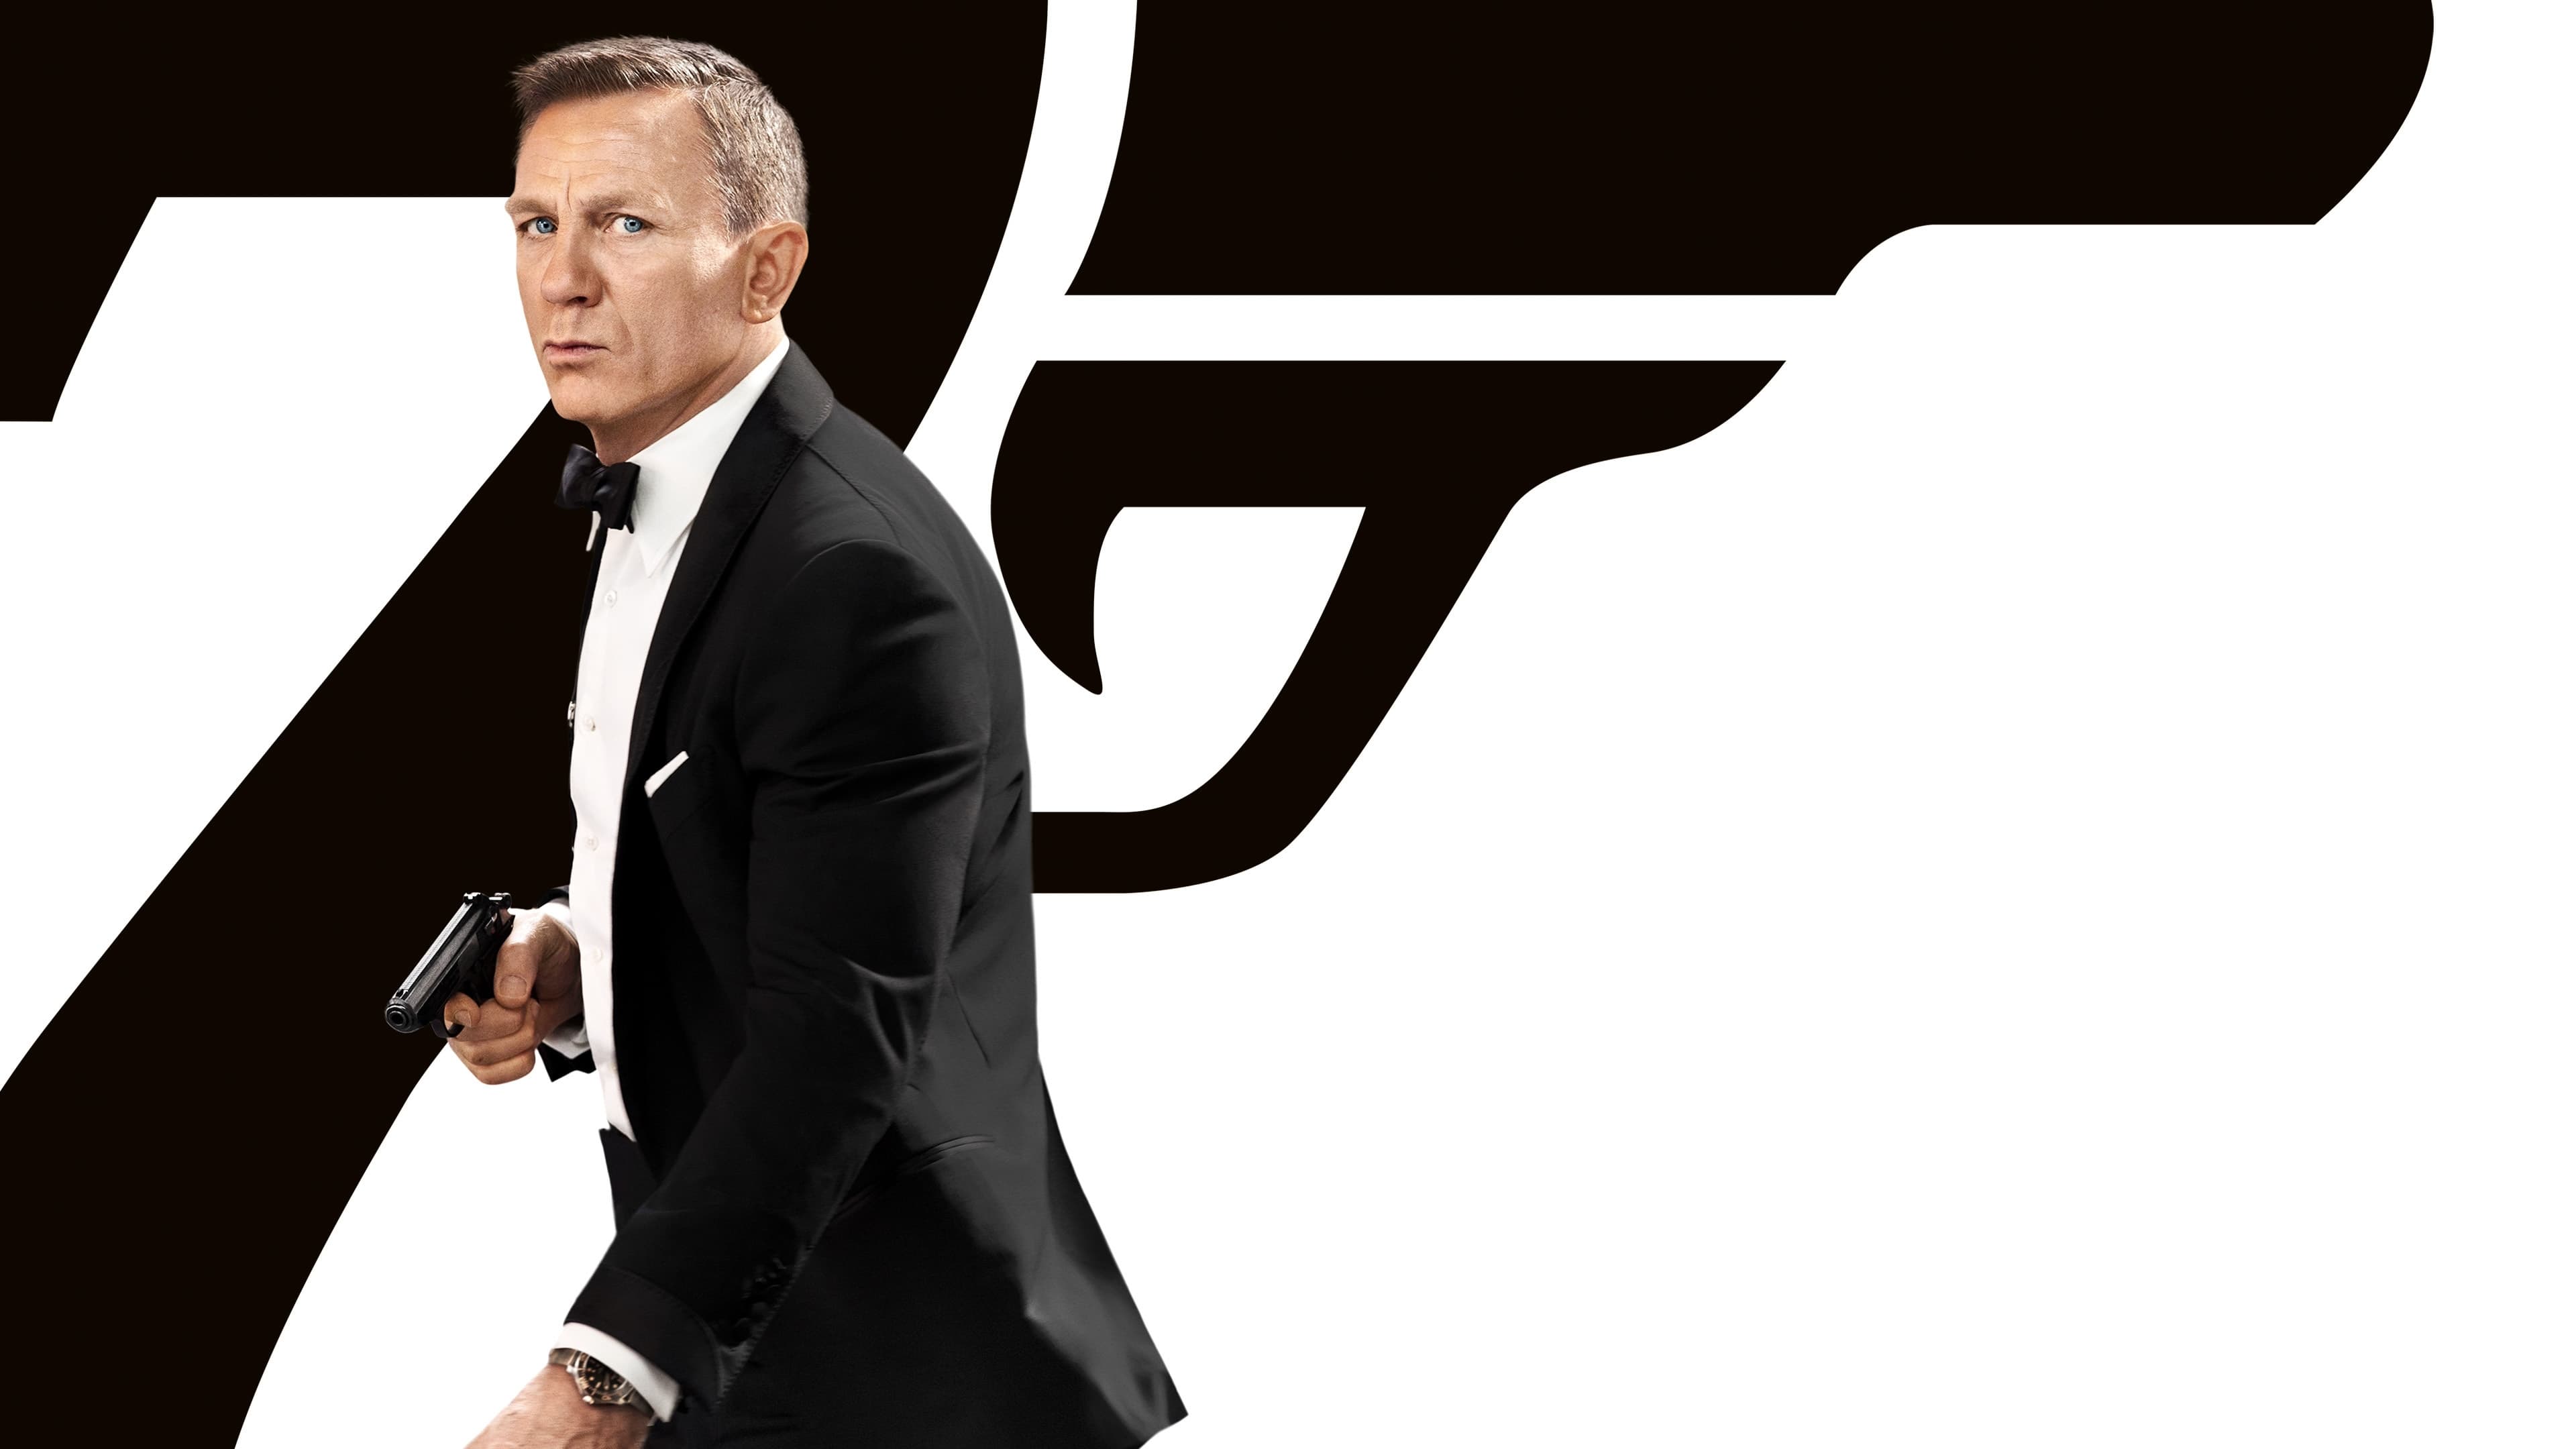 James Bond: No Time to Die (2021)